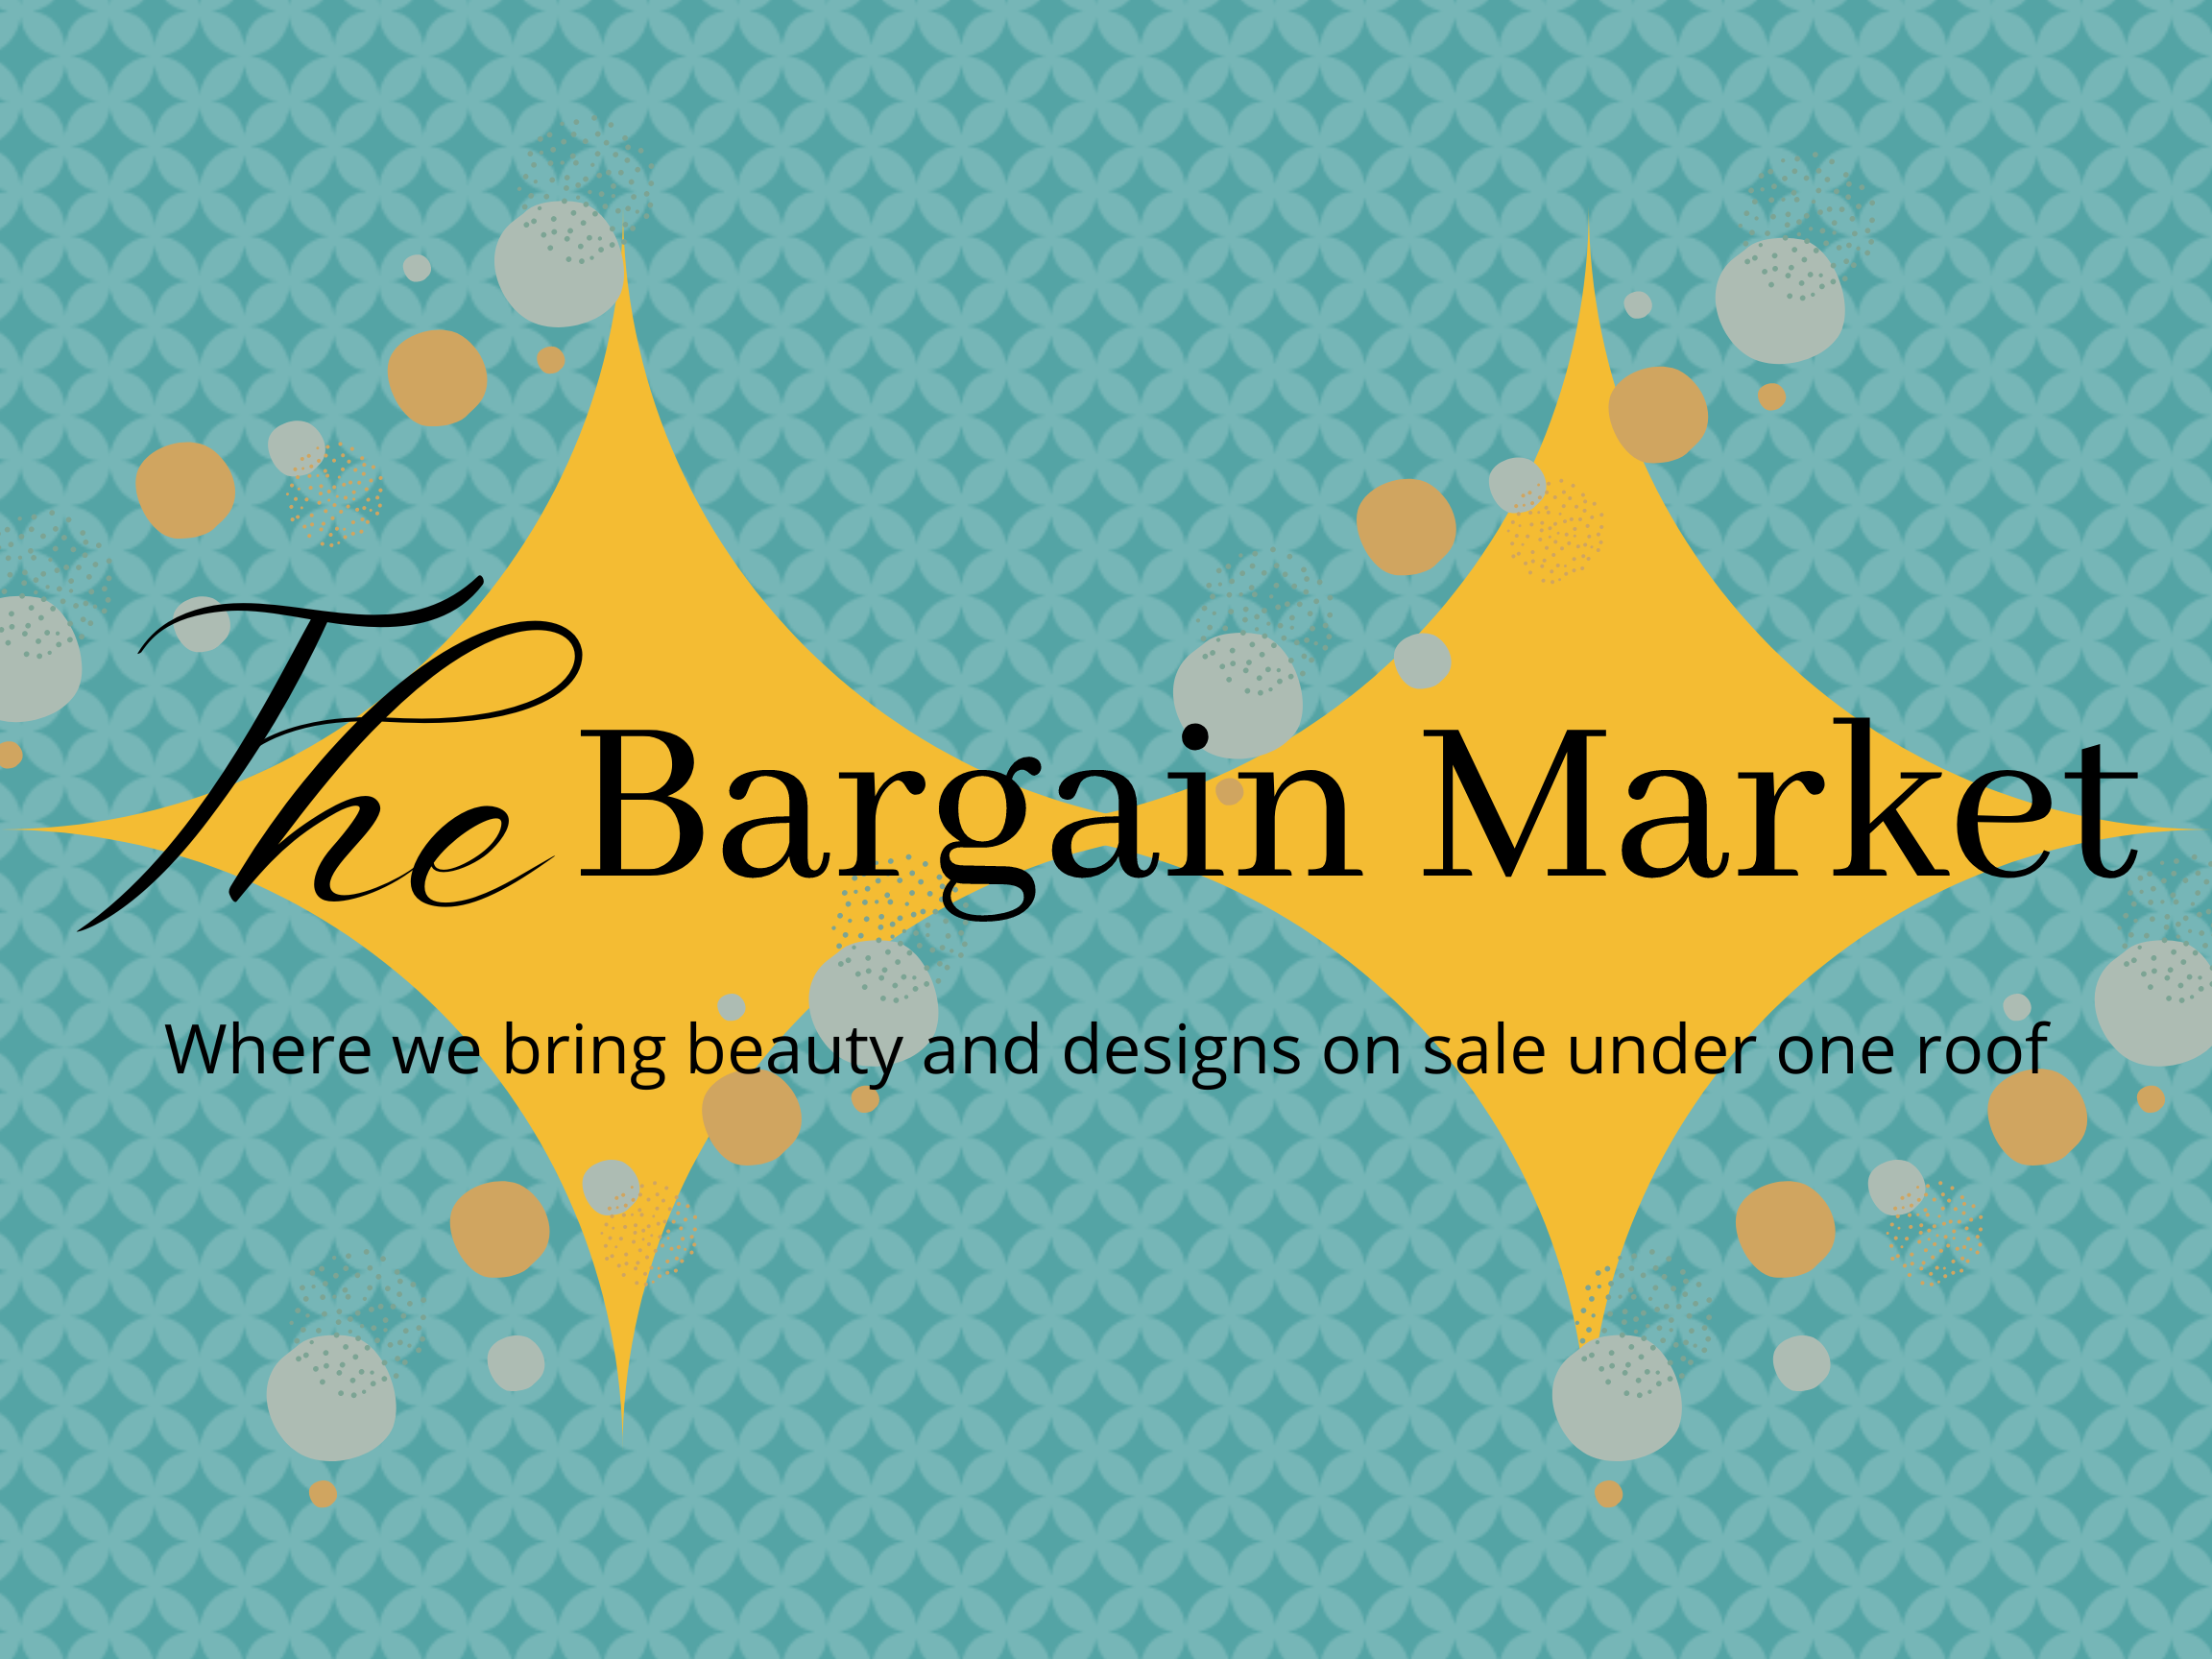 The Bargain Market